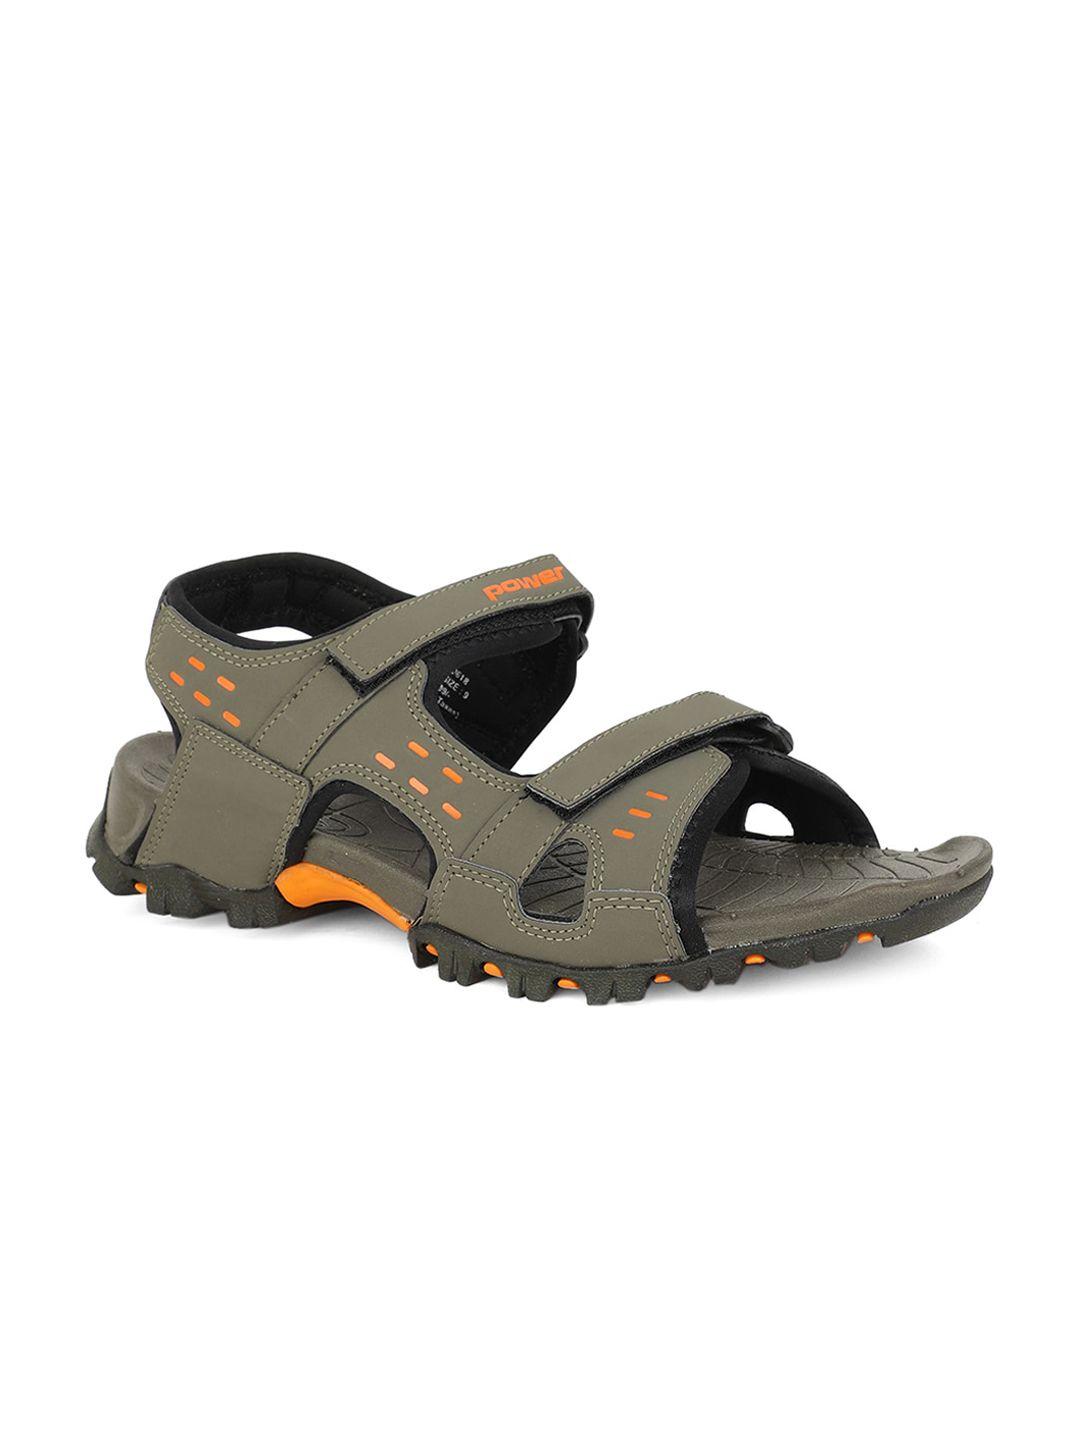 power men grey & orange patterned sports sandals